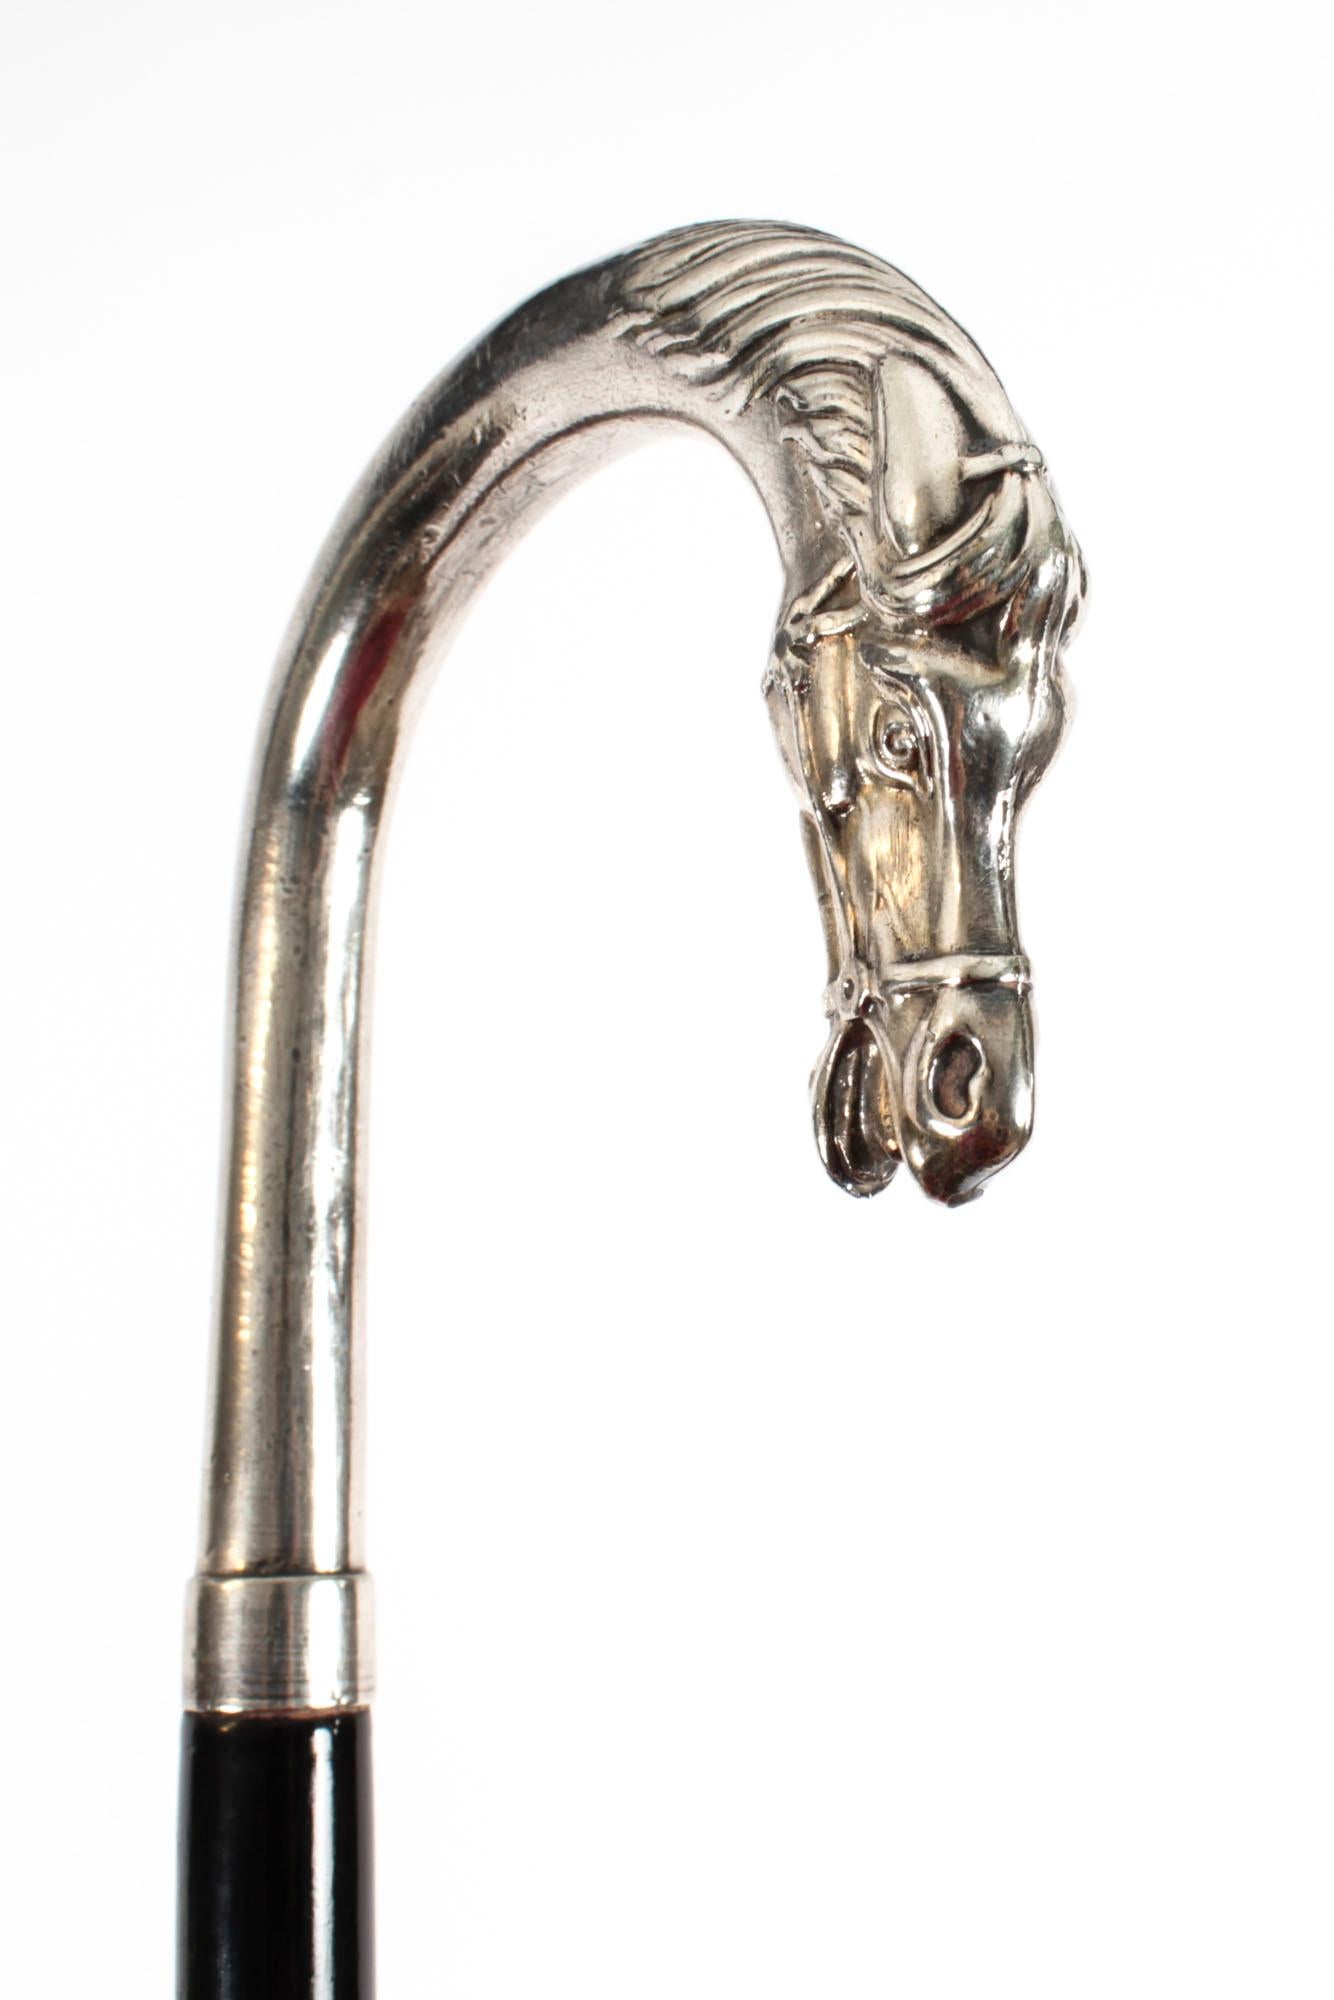 Art Nouveau Antique French Silver Plate Horse Ebonized Walking Cane Stick Late 19th C